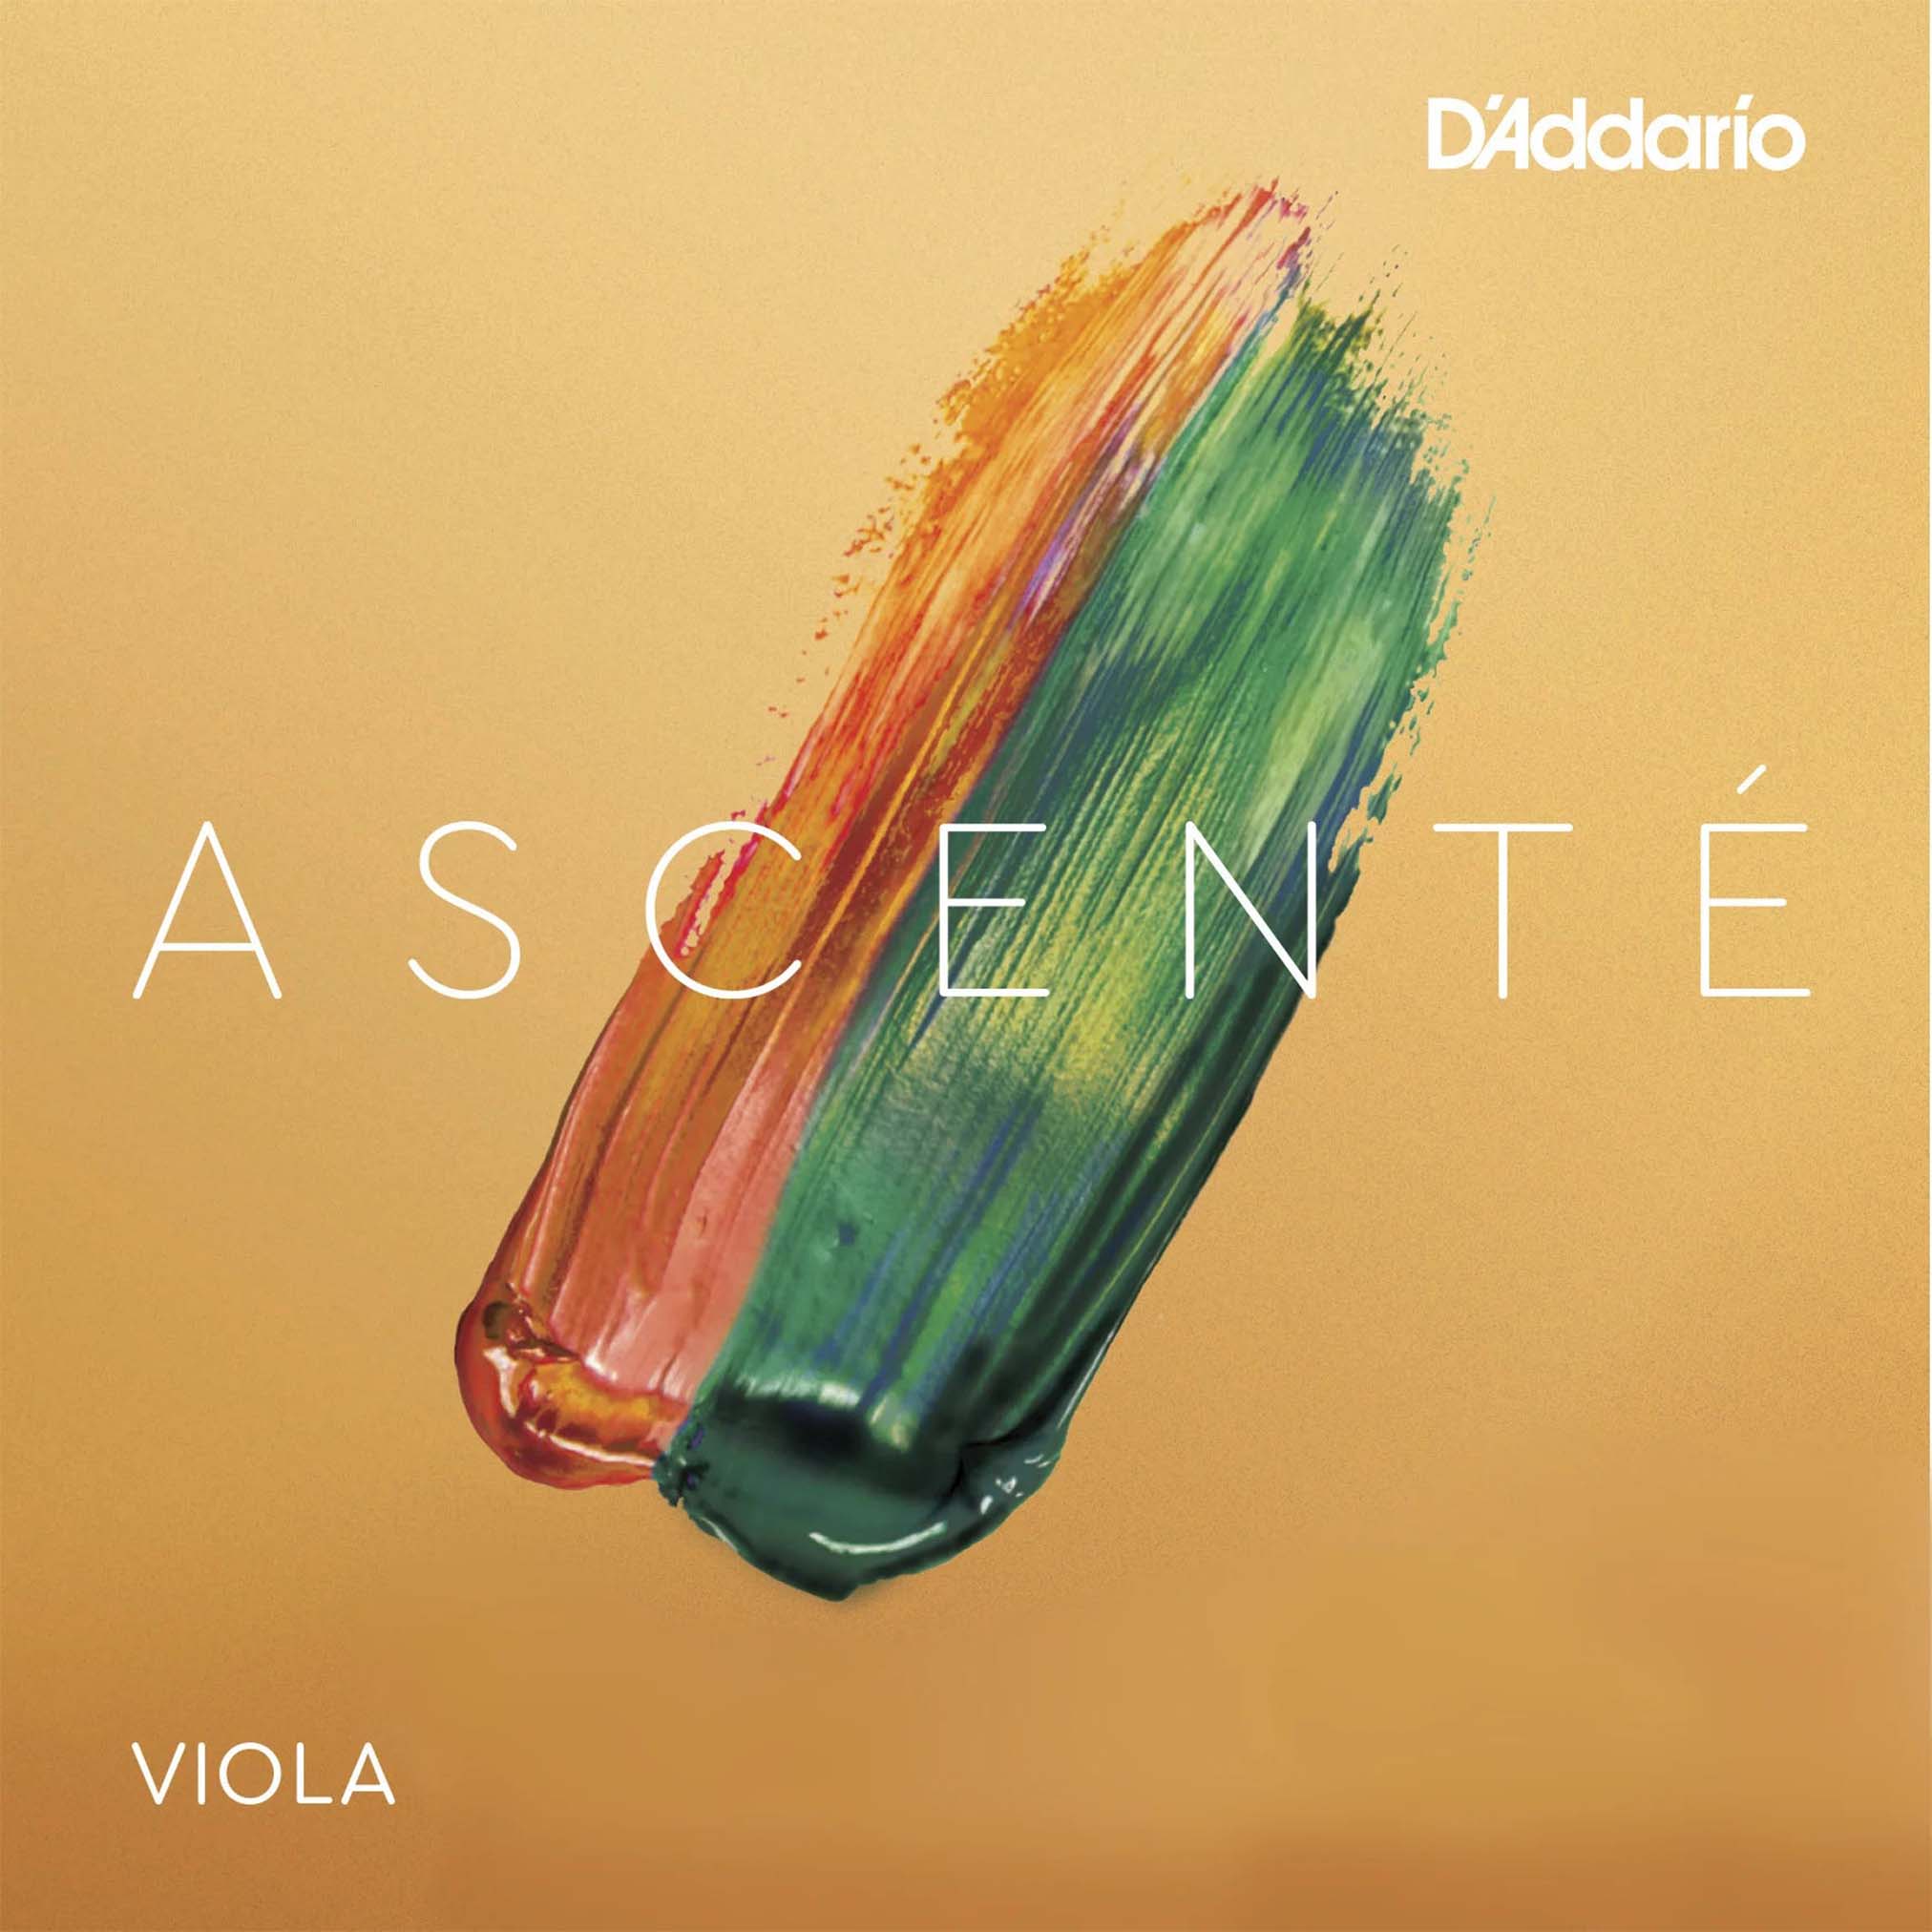 D'addario Ascenté Viola C String